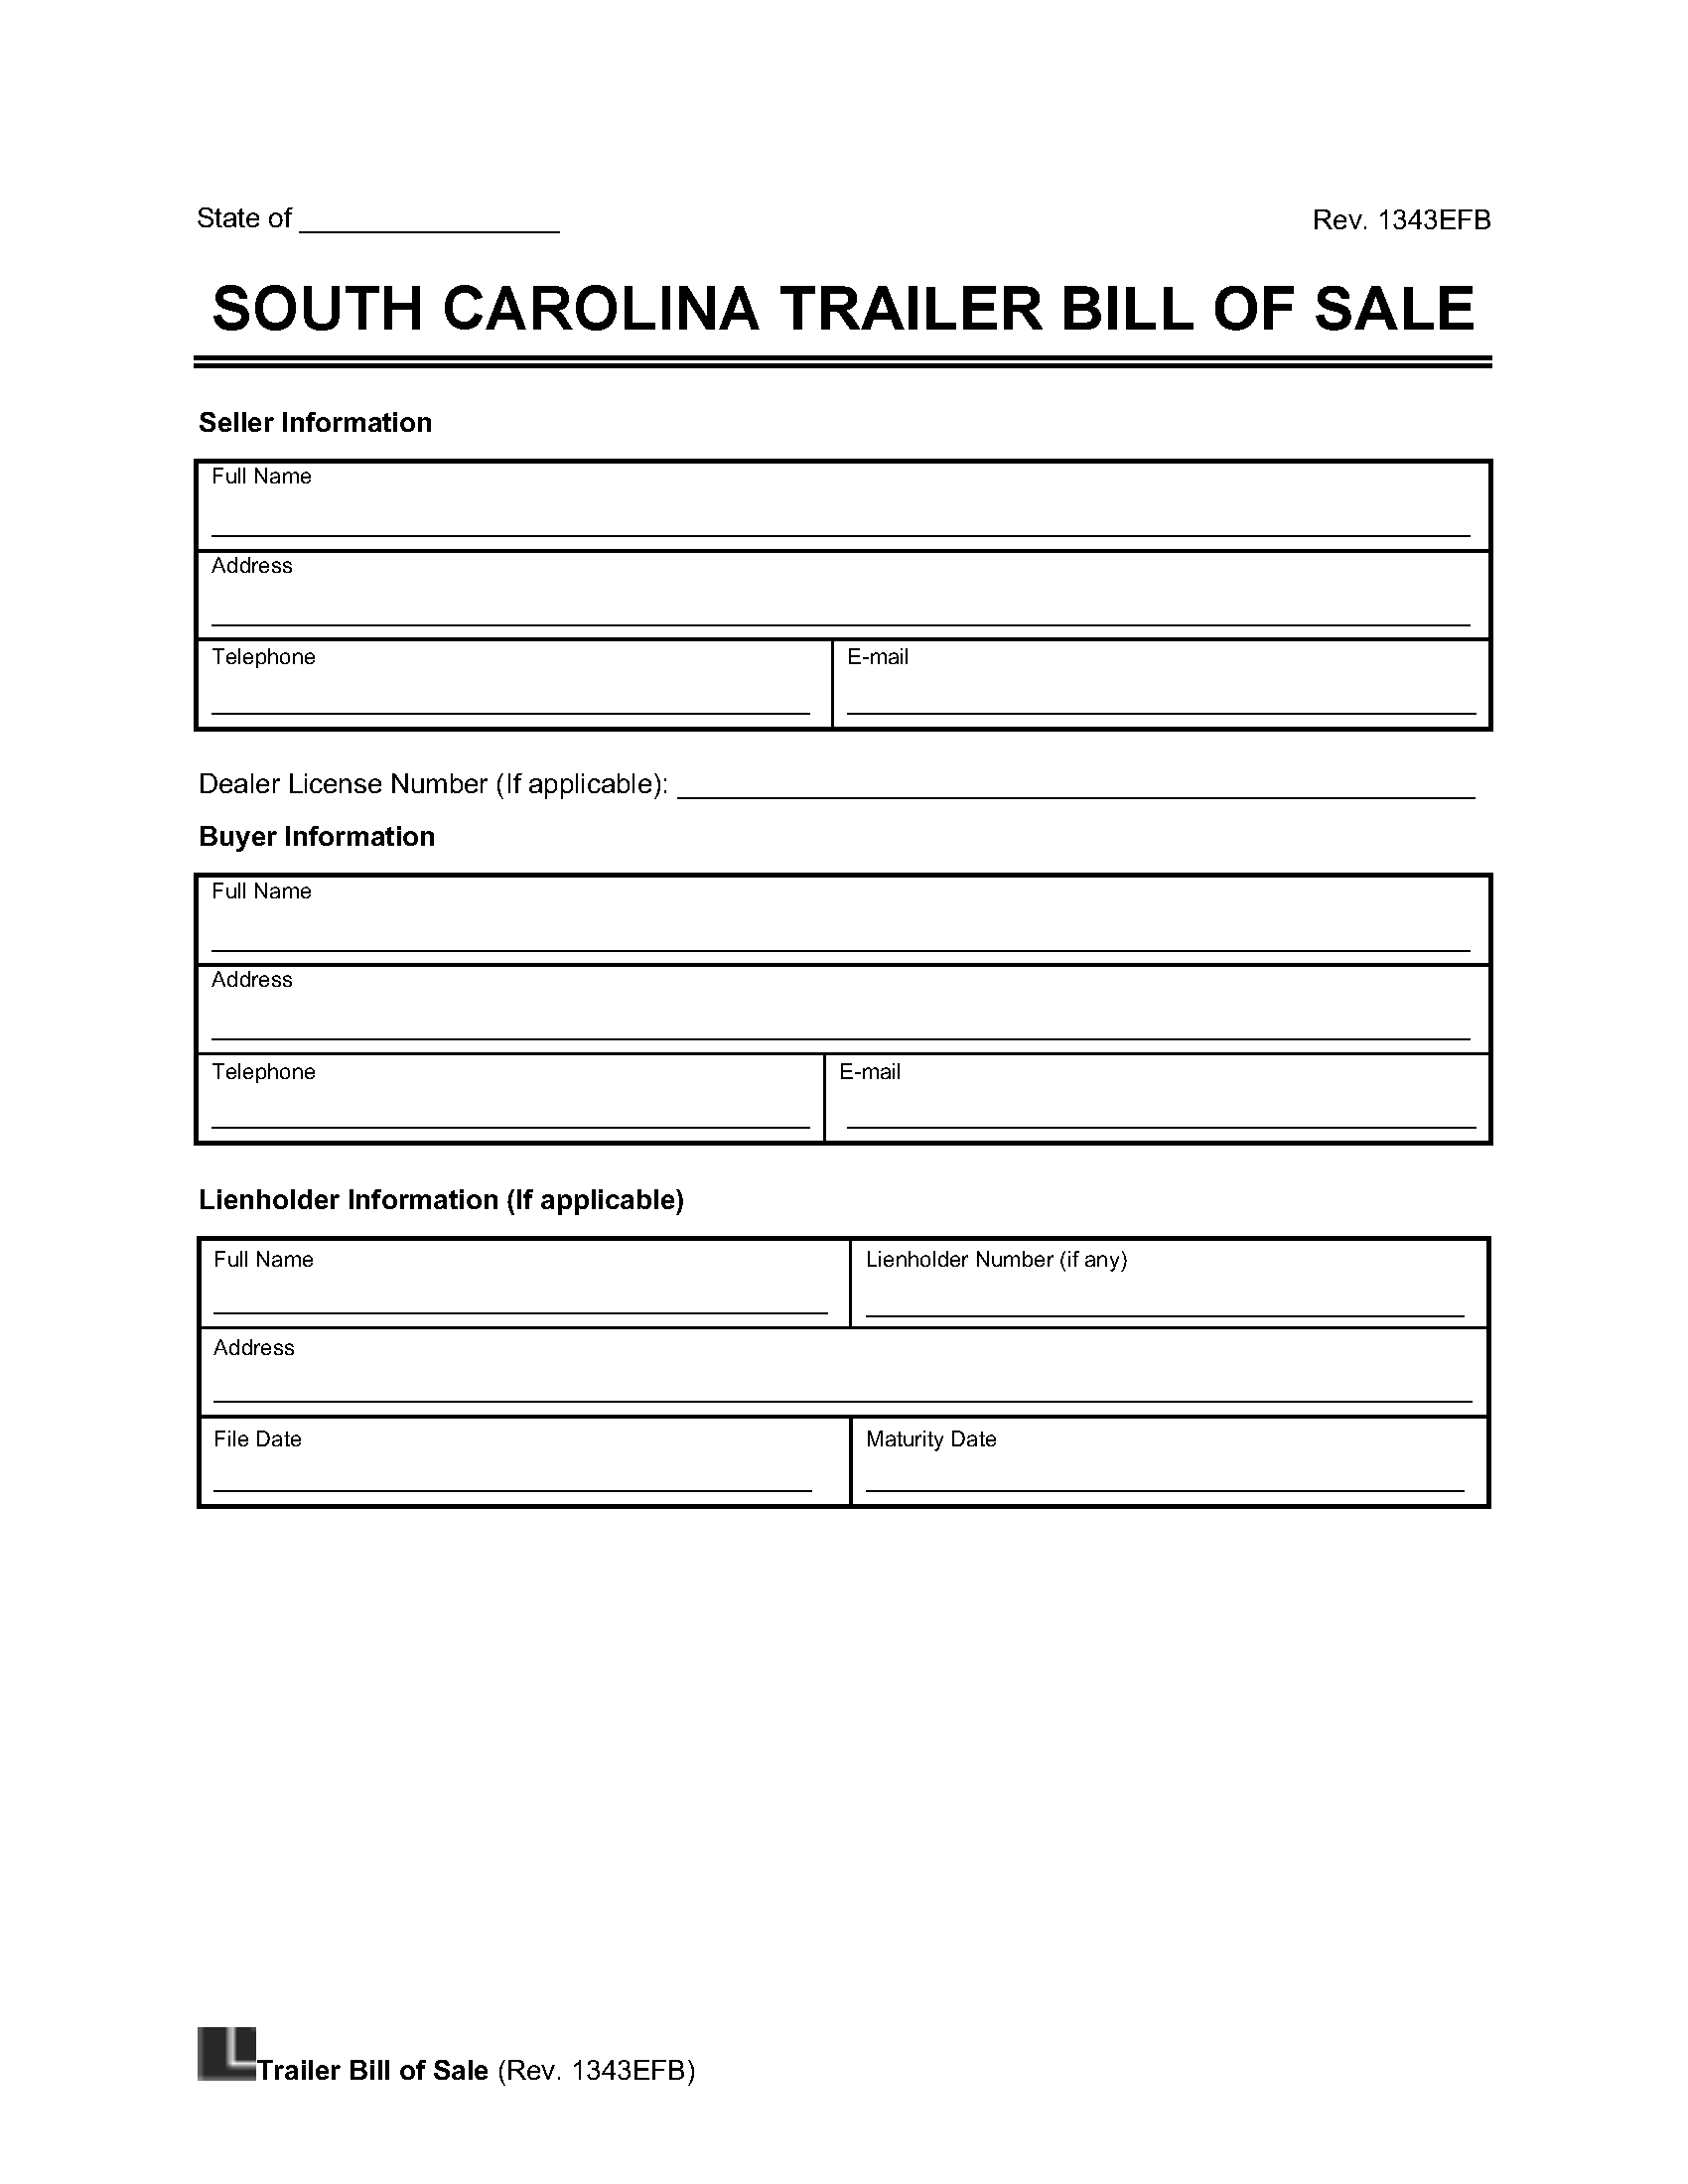 South Carolina Trailer Bill of Sale screenshot